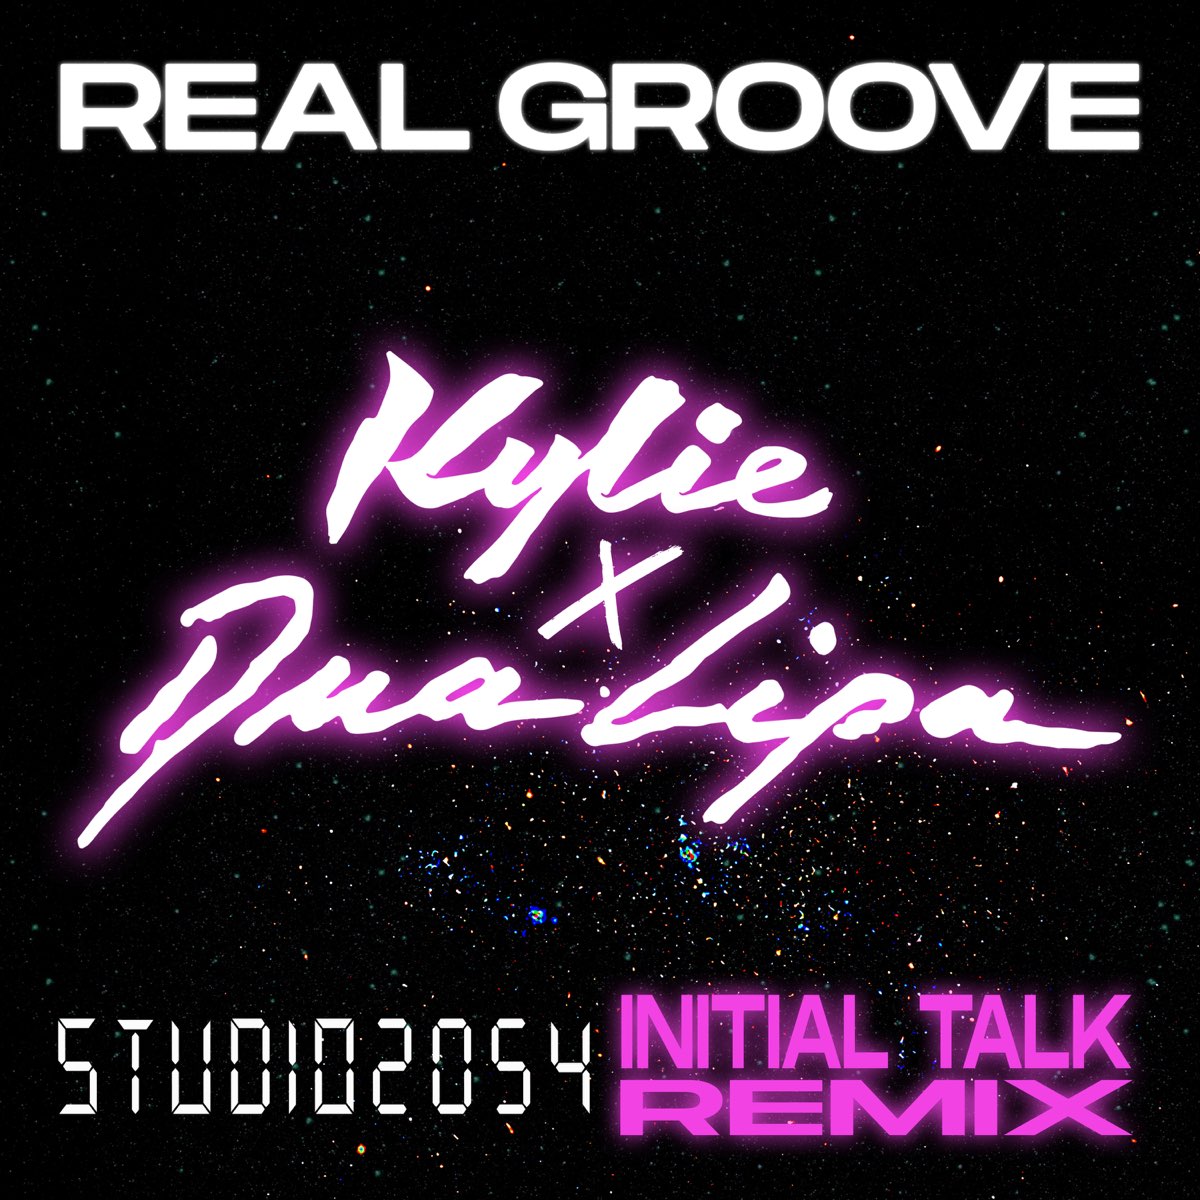 Kylie Minogue featuring Dua Lipa — Real Groove (Studio 2054 Initial Talk Remix) cover artwork